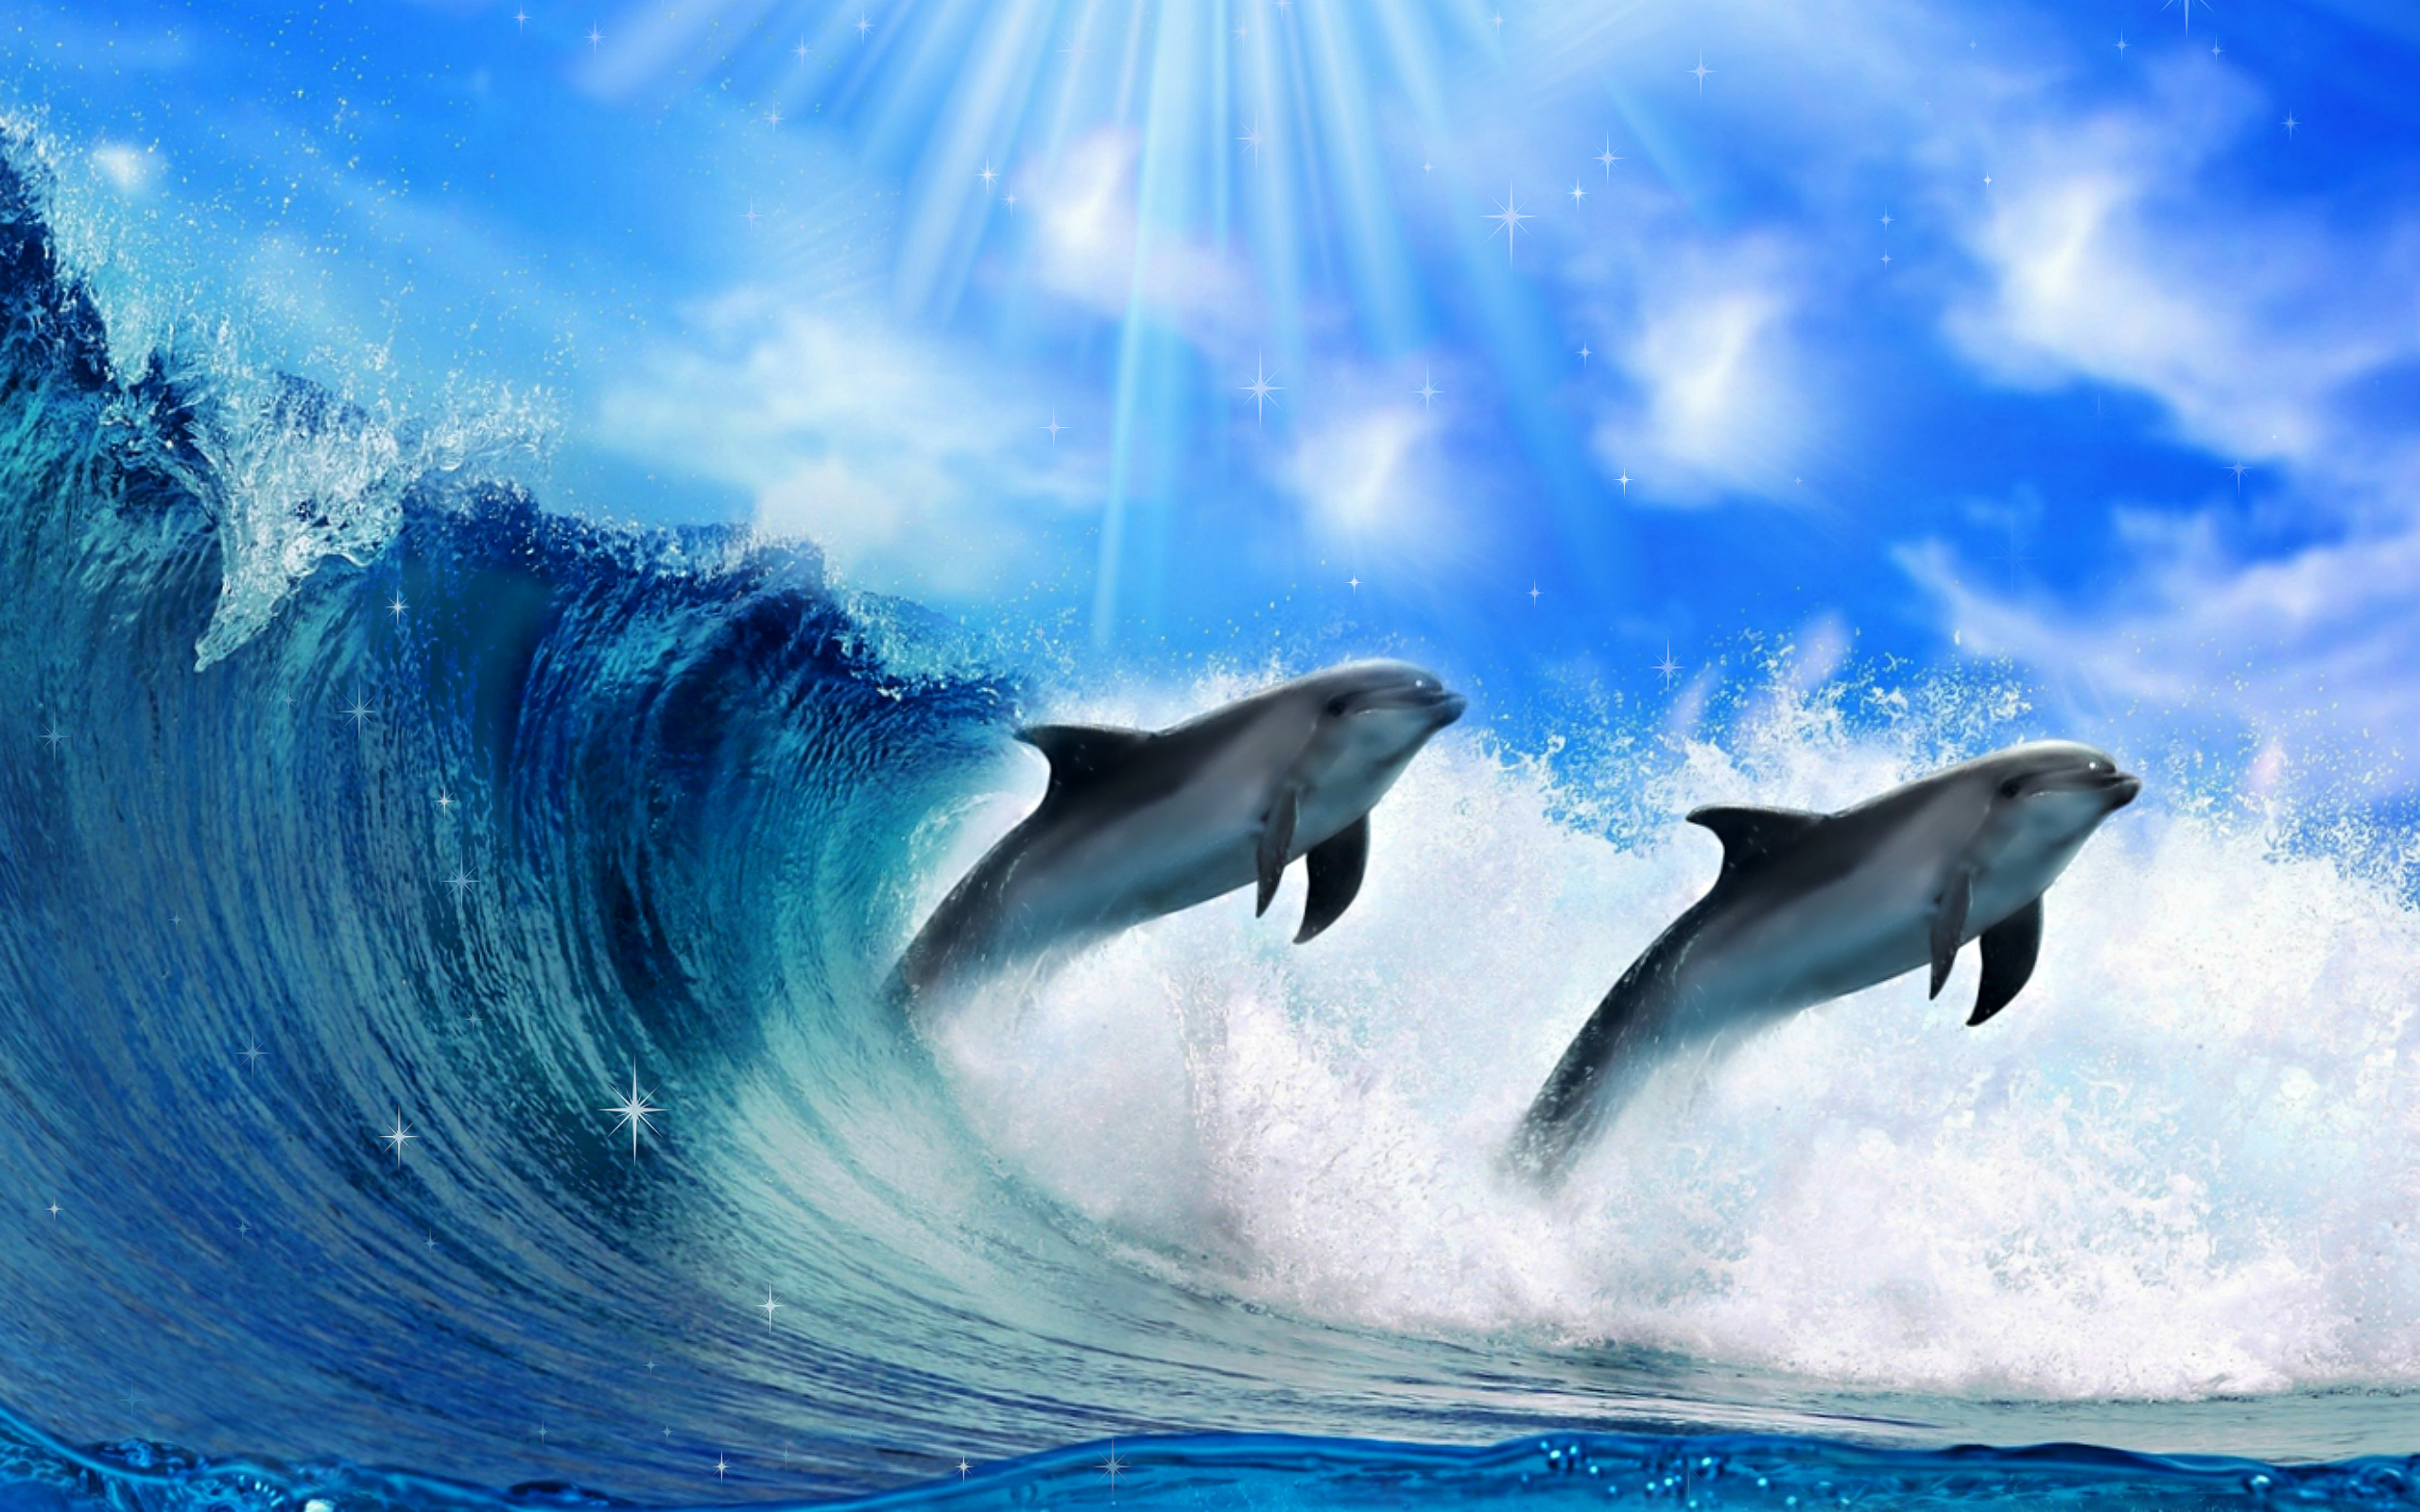 Dolphin Wallpaper HD